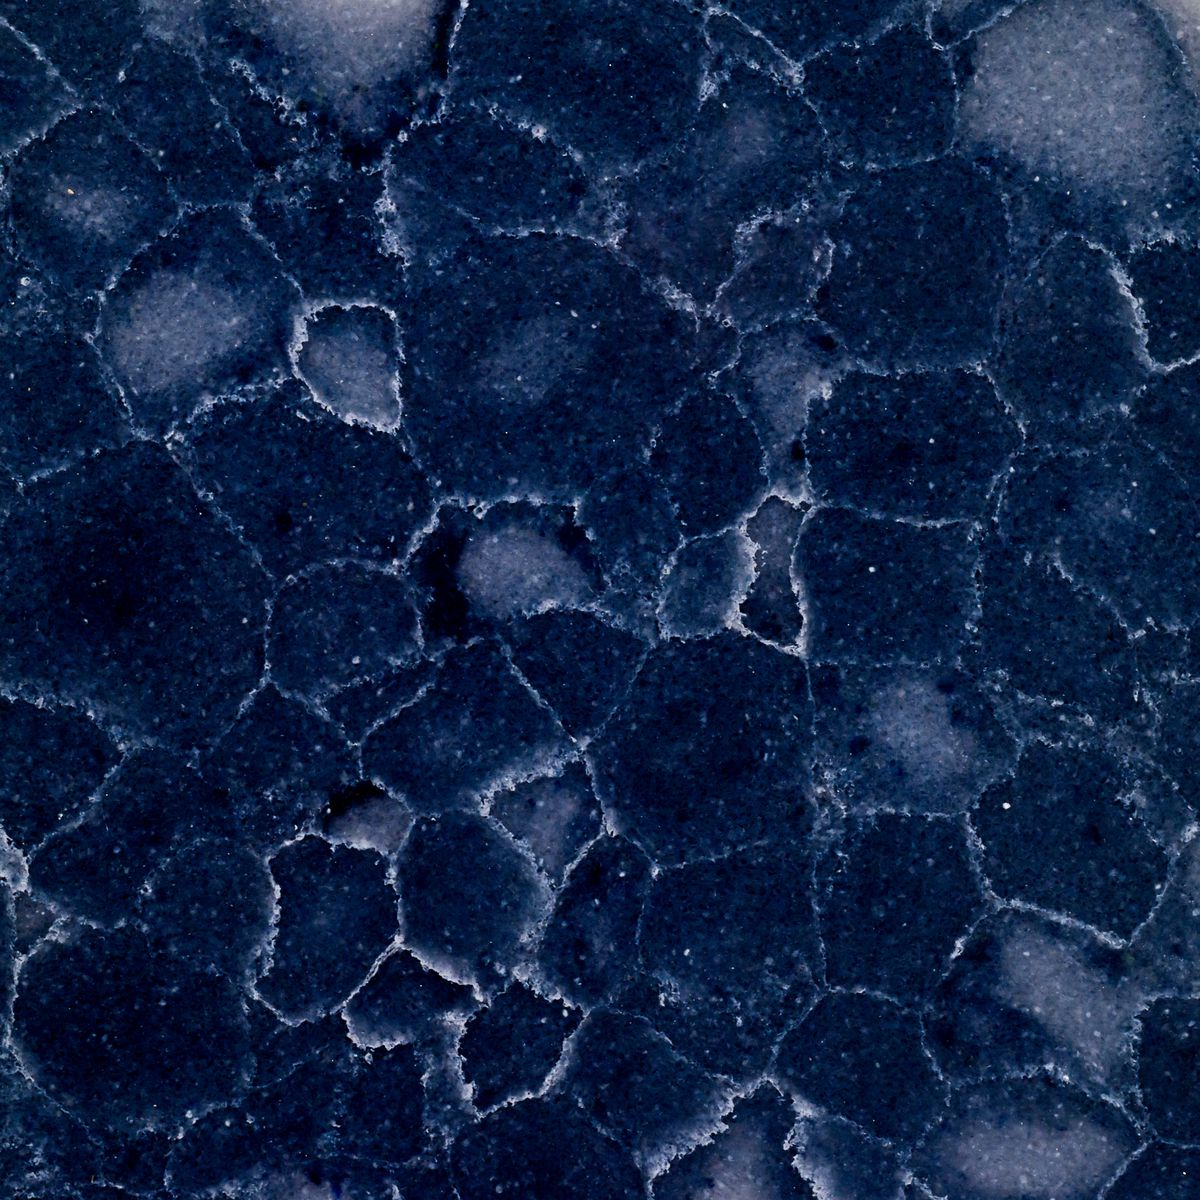 Dark blue and bold texture on quartz.